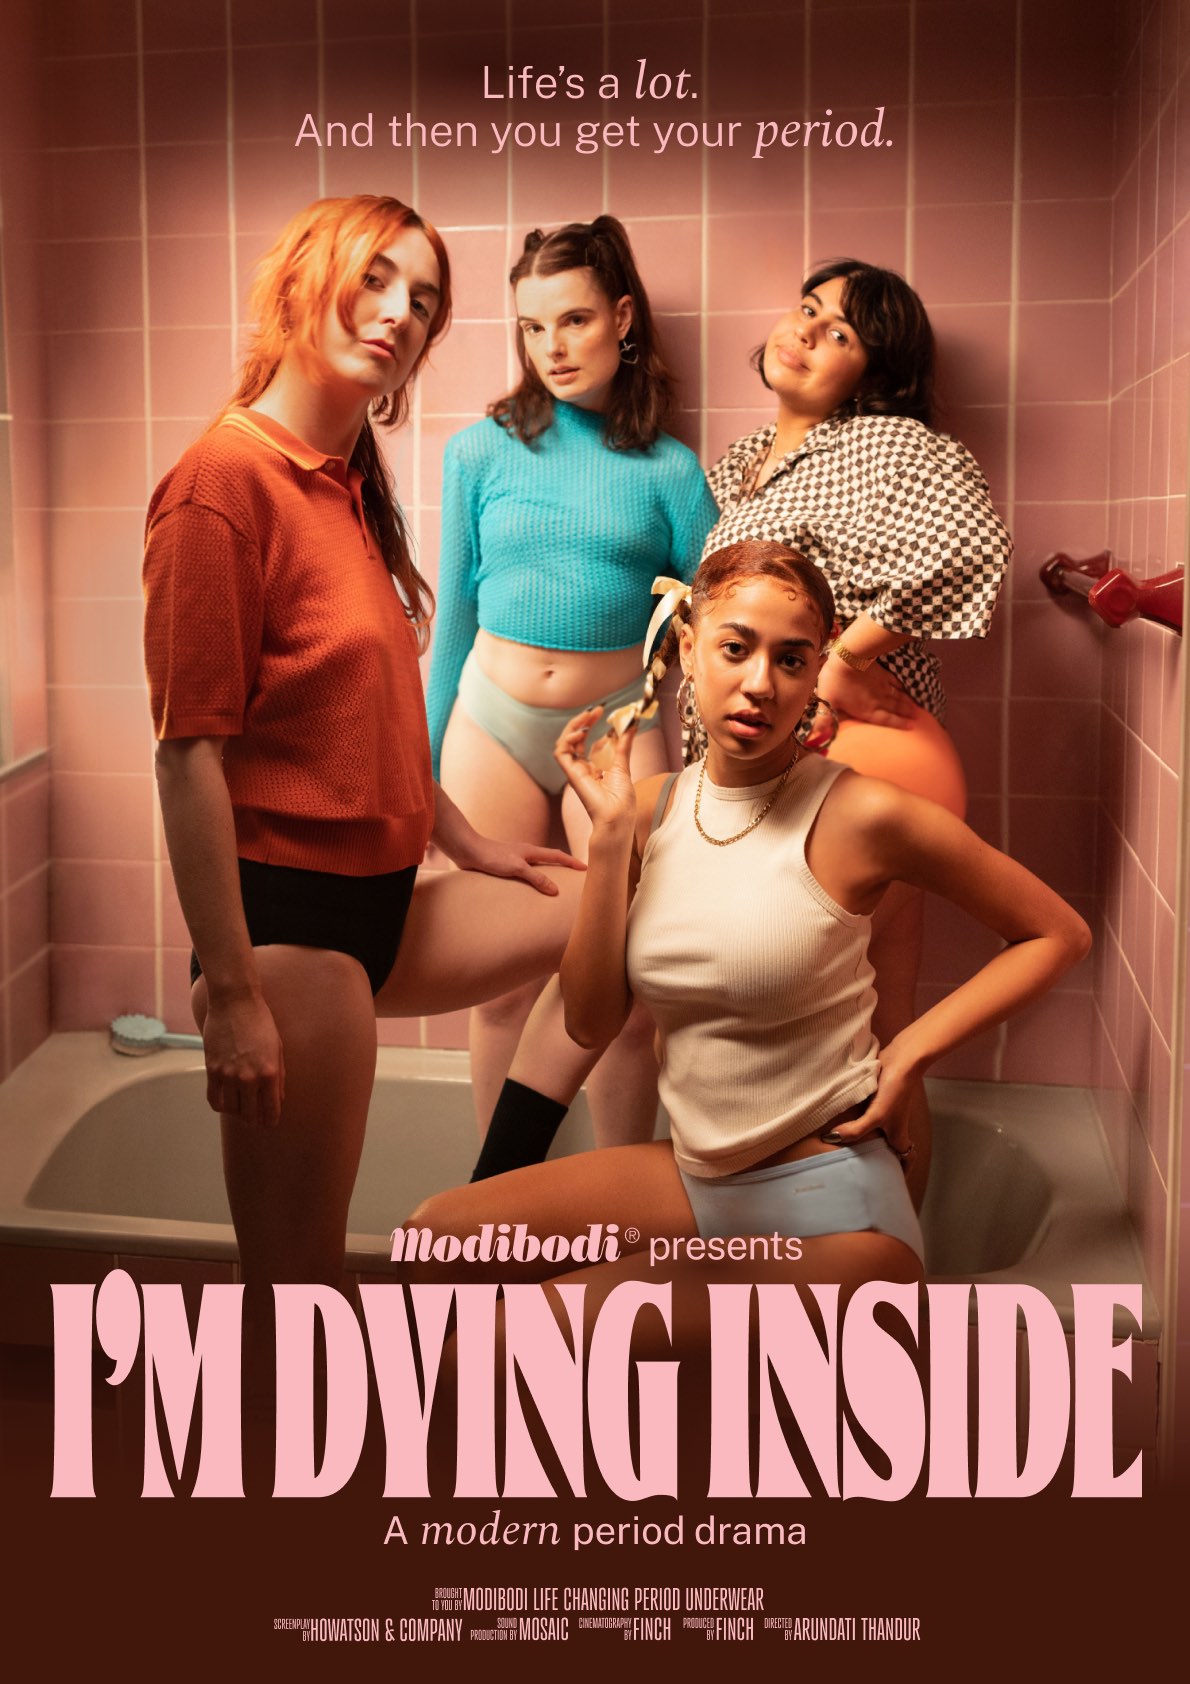 I’m Dying Inside: Modibodi creates modern period drama made for gen-z via Howatson+Company